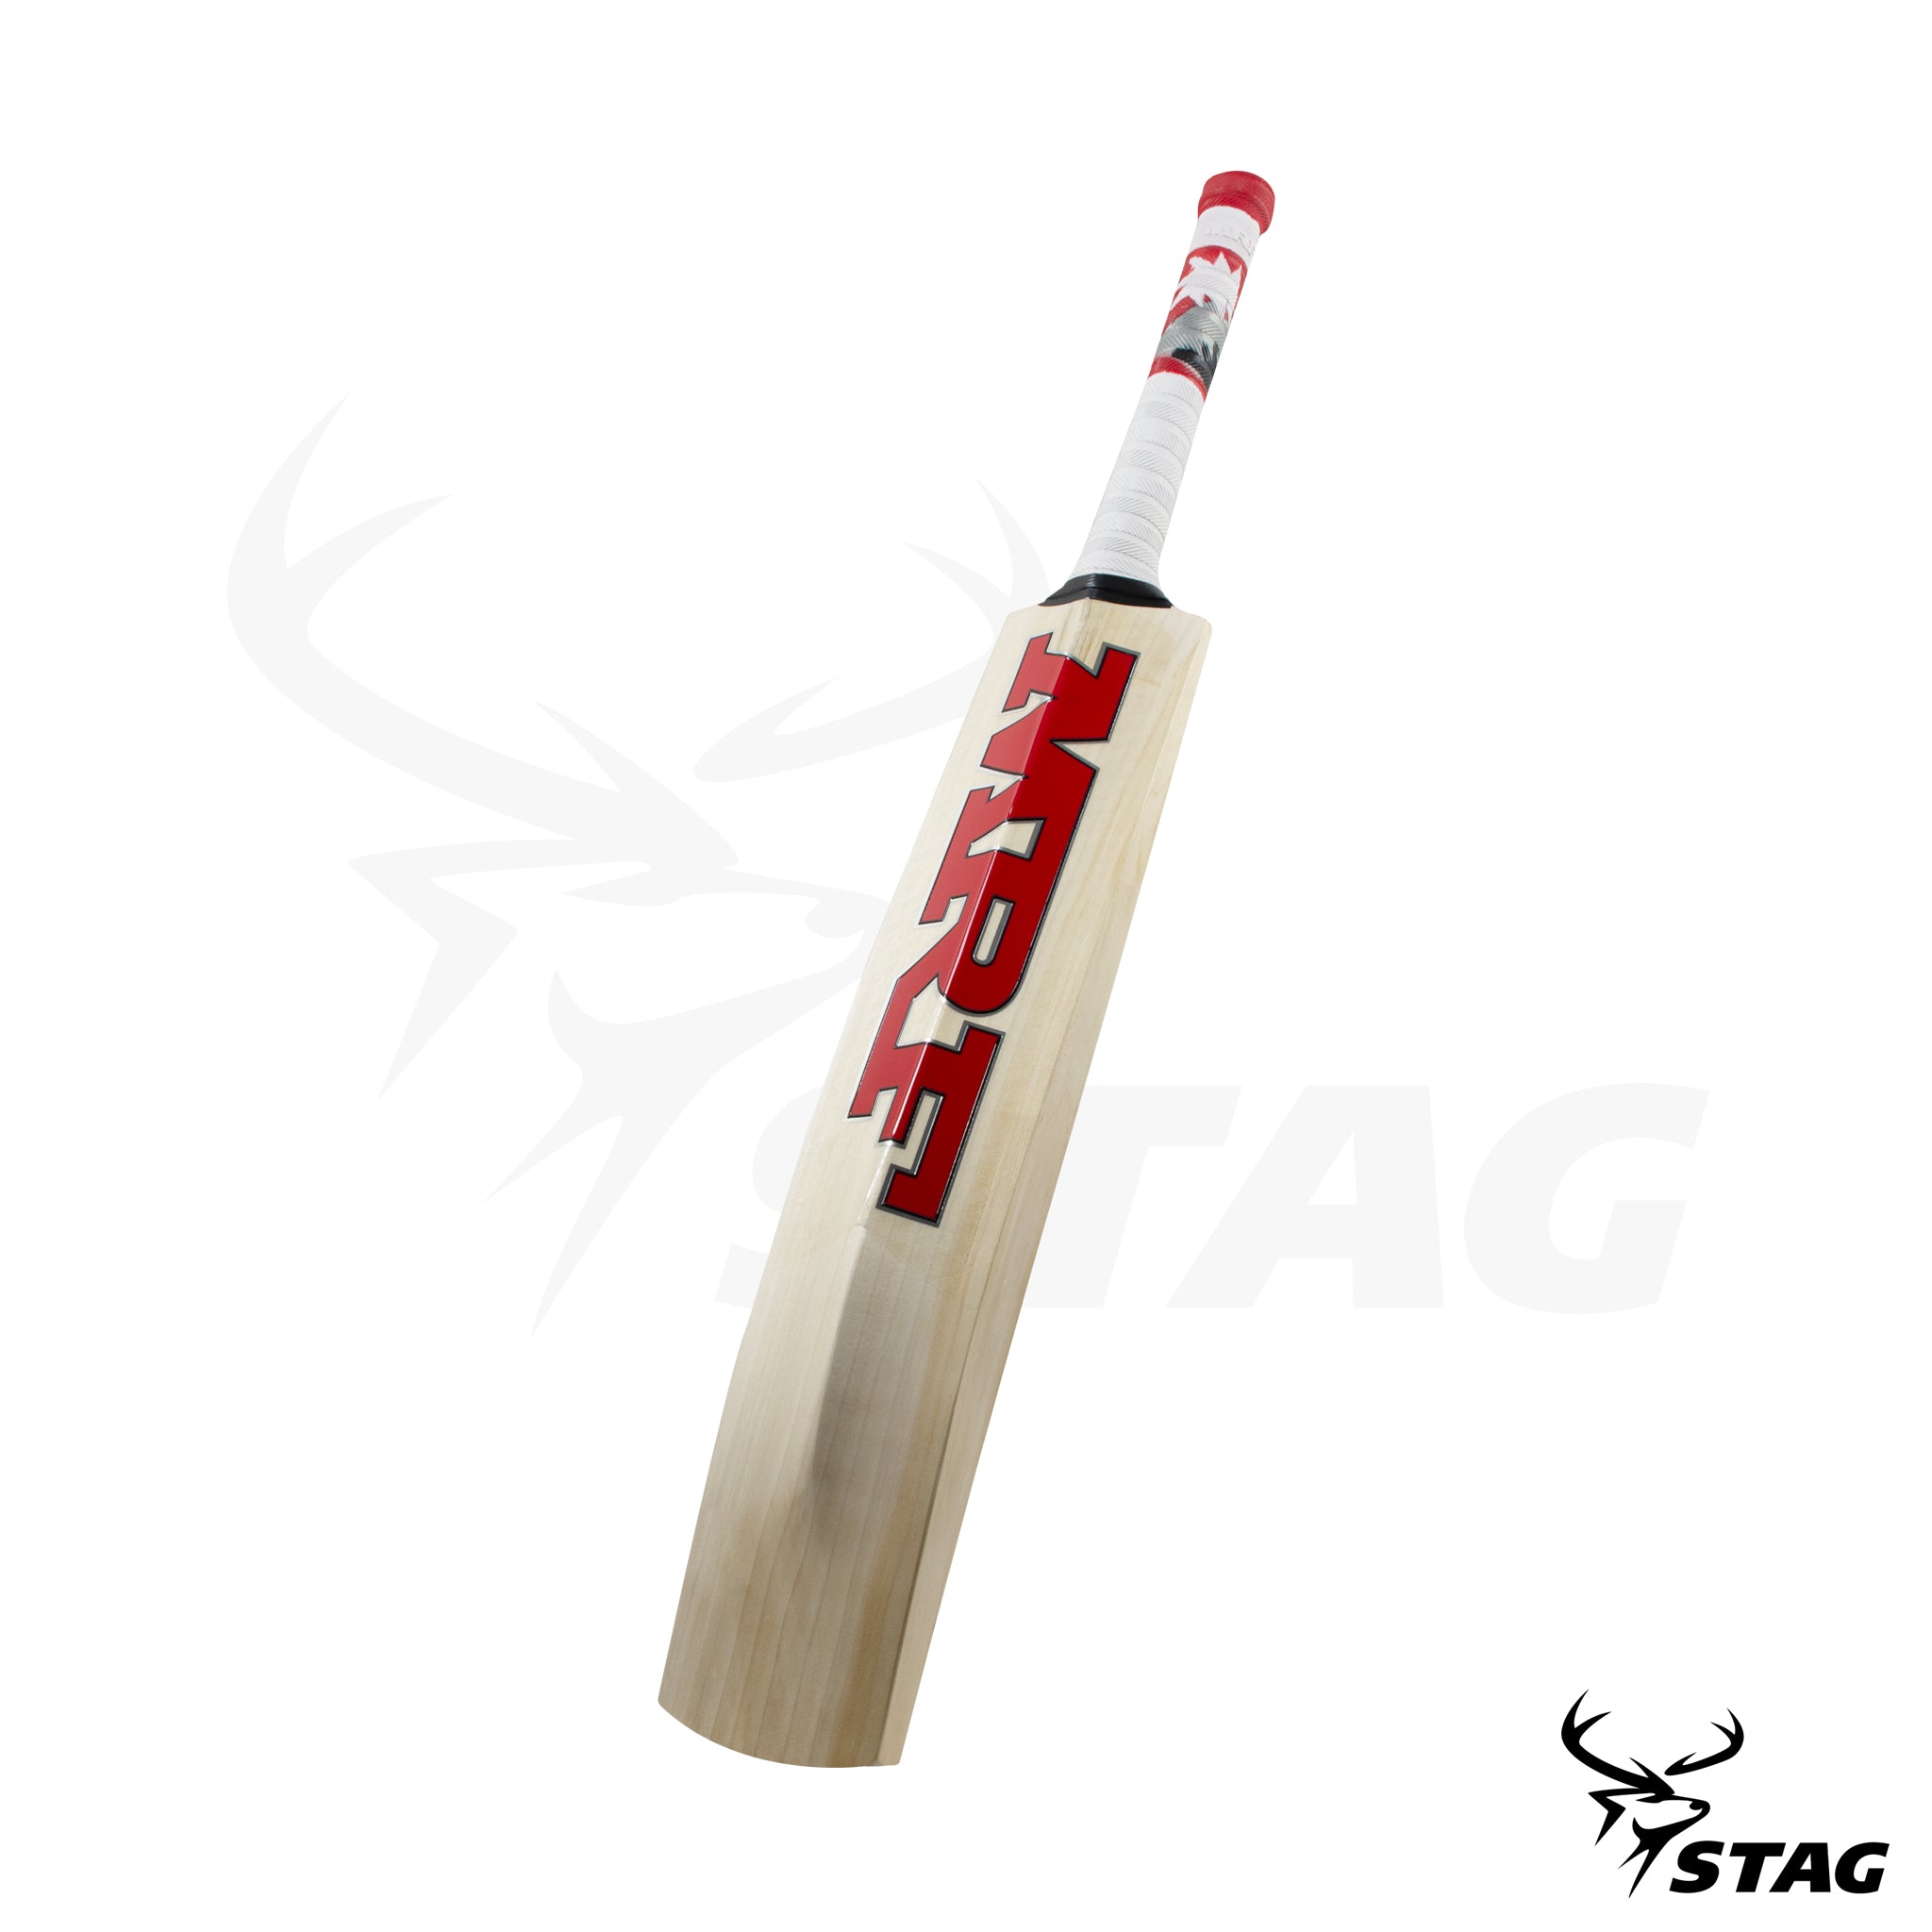 MRF Virat Kohli Chase Master English Willow Cricket Bat